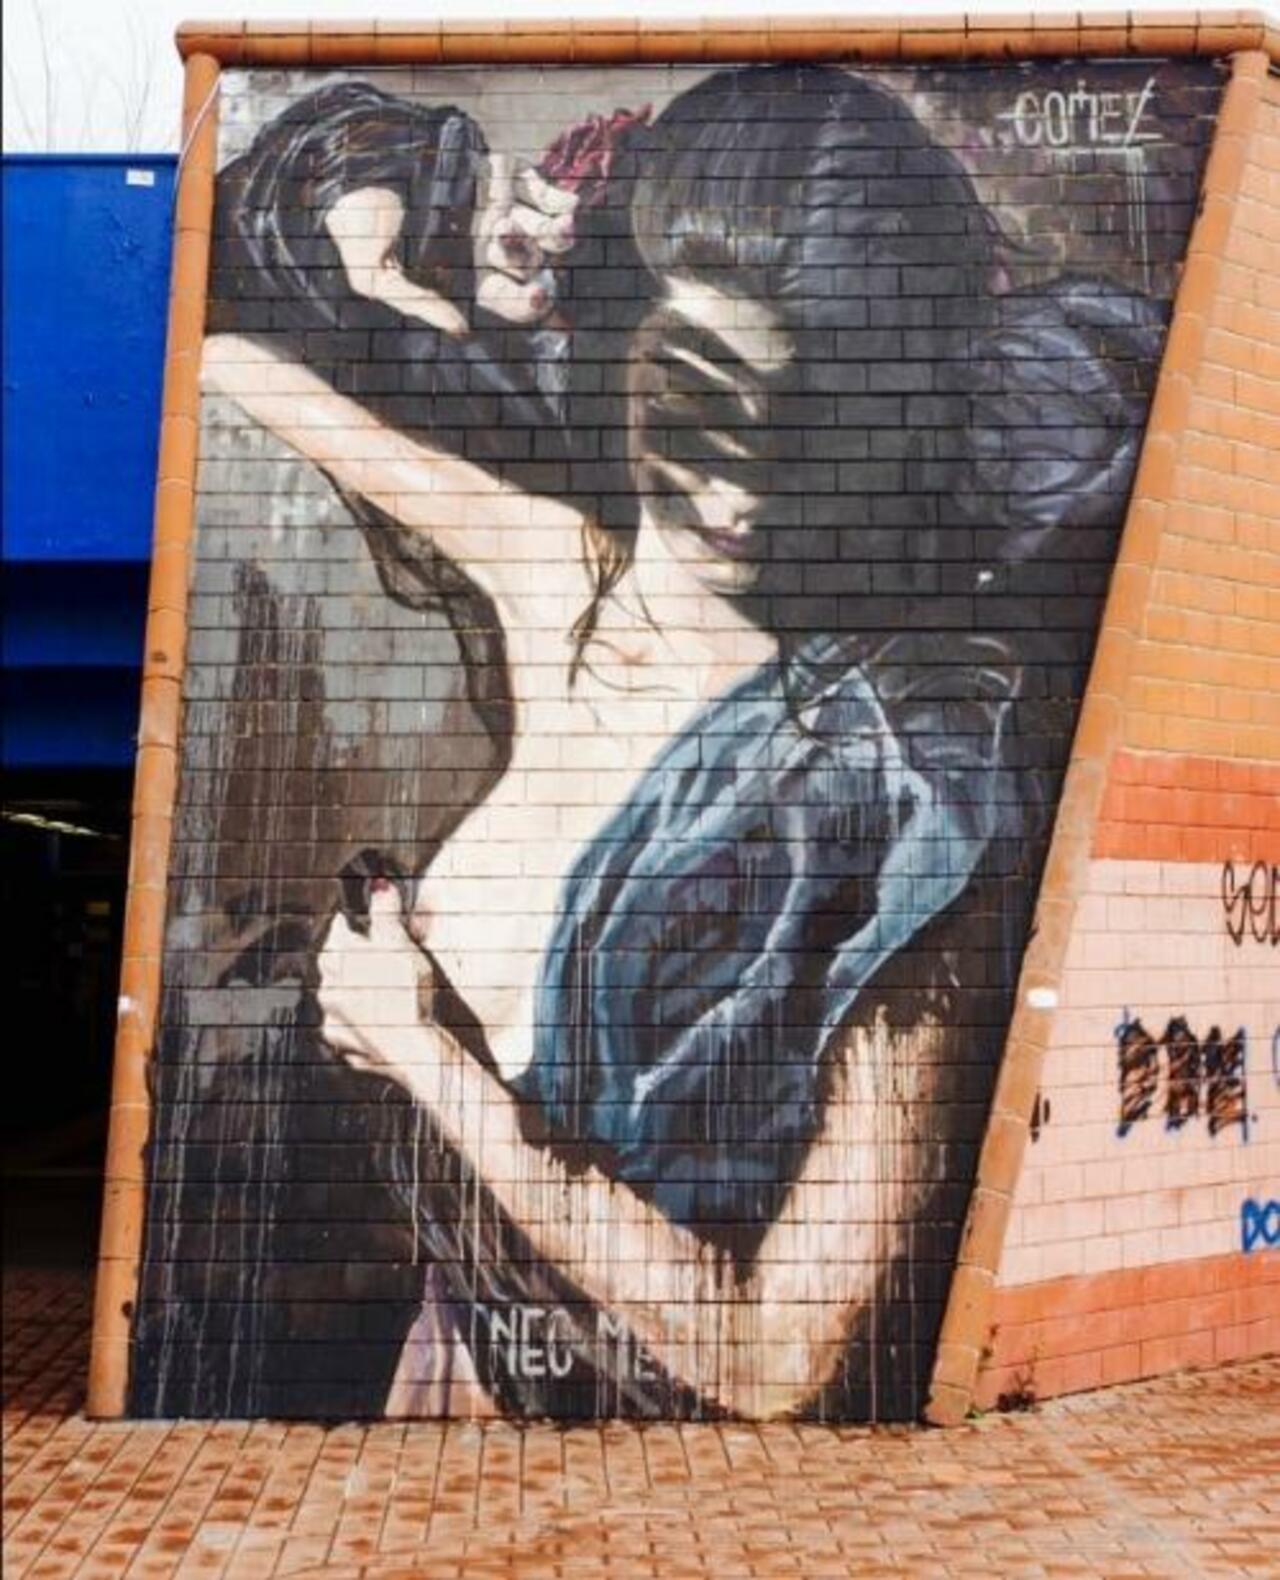 Luis Gomez - #Graffiti #Mural #Murales #Photo #Rome - #ZangArt #Showcase - http://bit.ly/1GA08Zj http://t.co/dEmHcJBYer